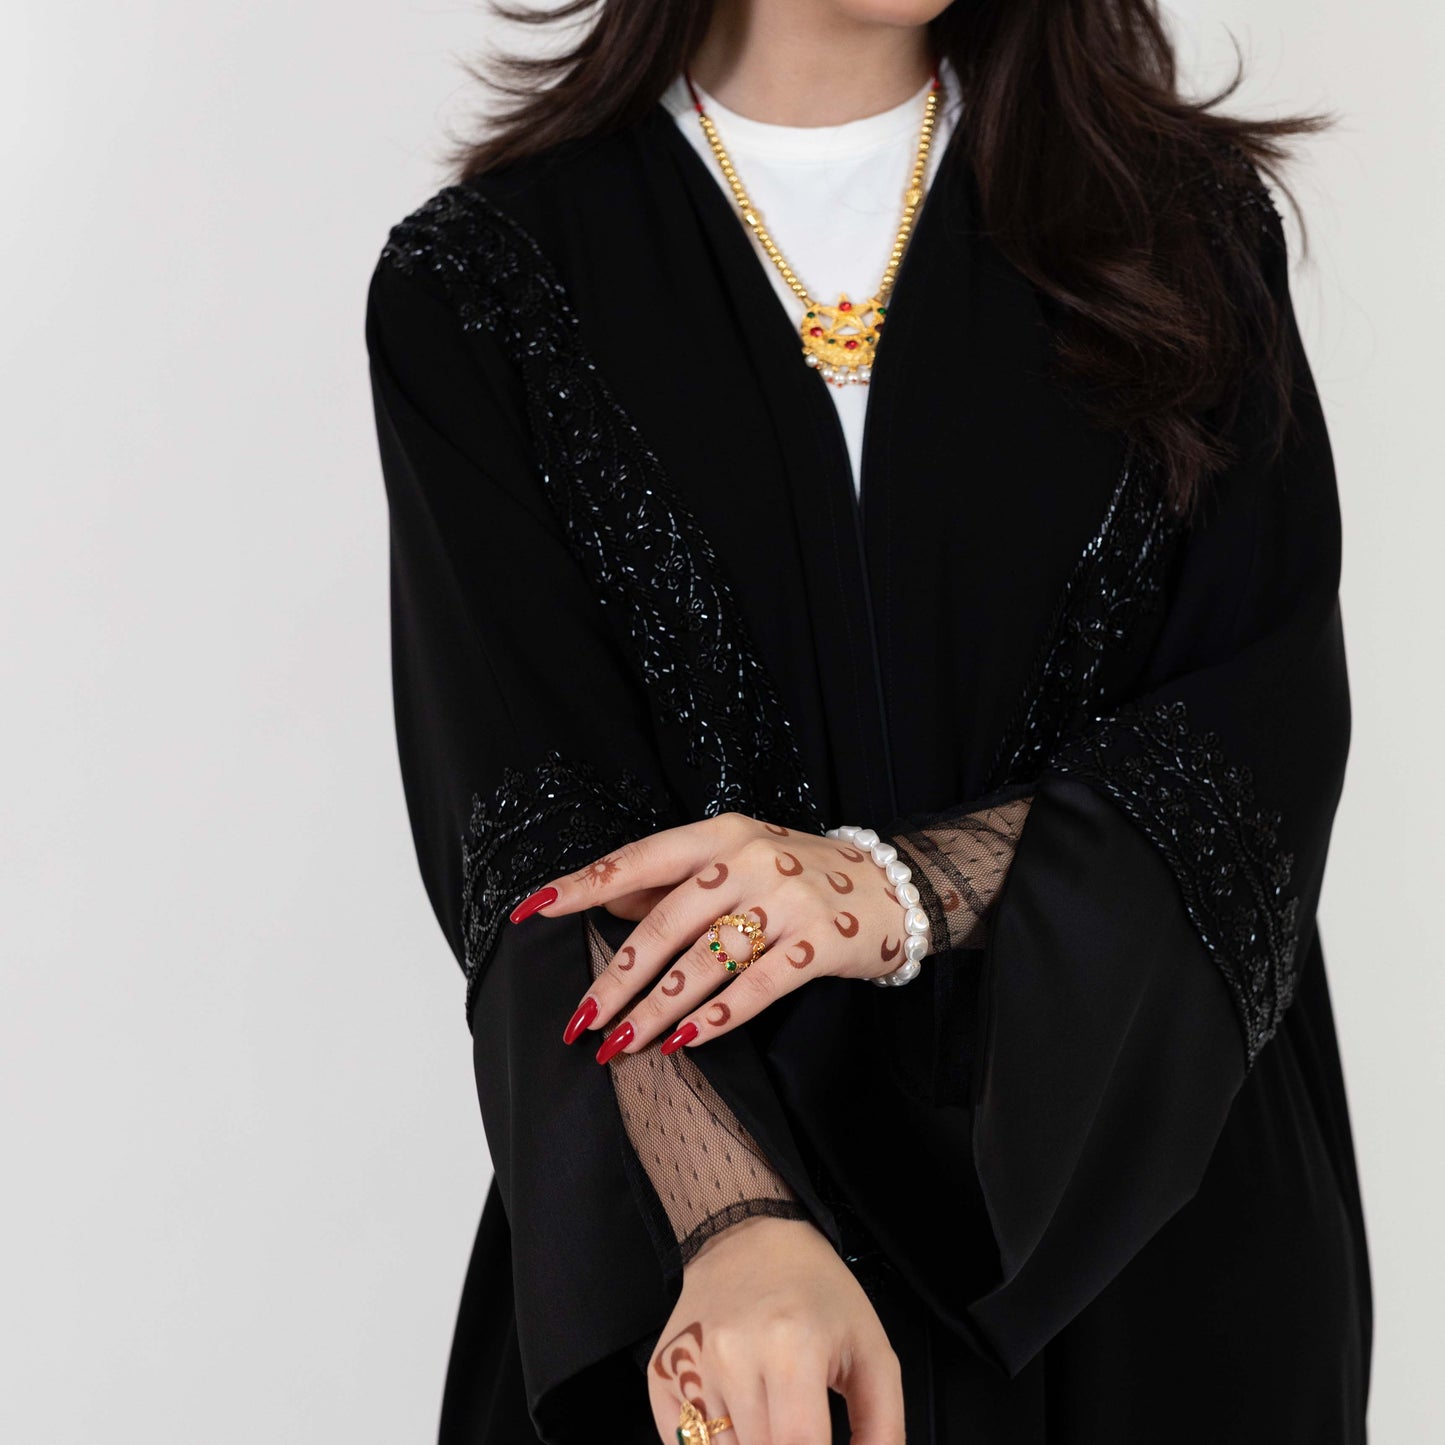 Black Abaya With Dantel Sleeve